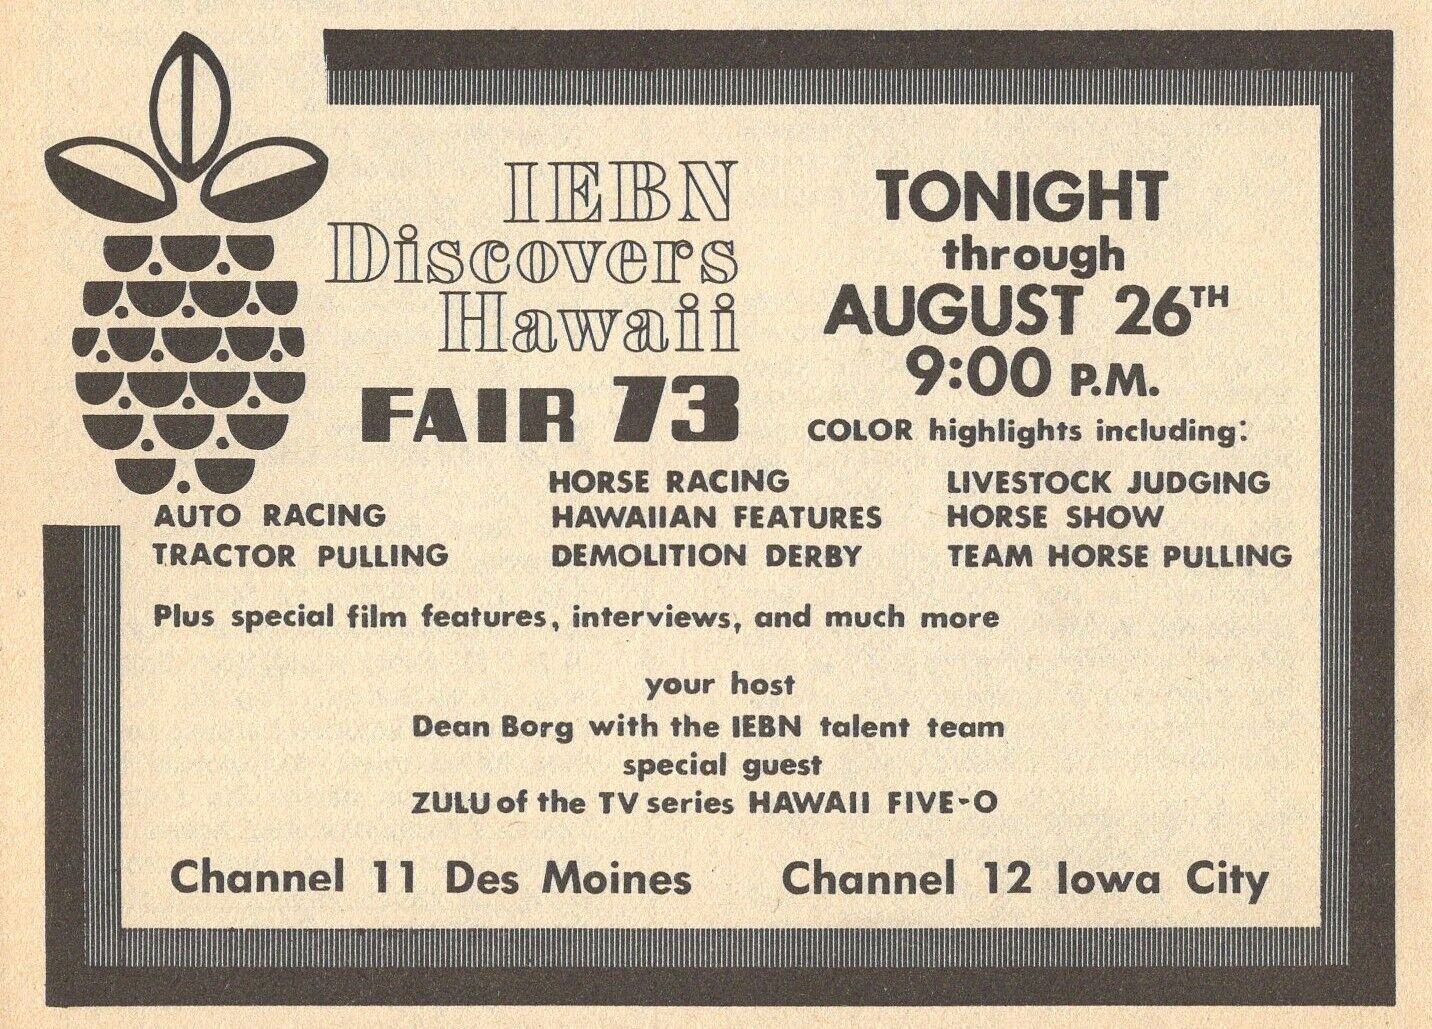 1973 AD ~ IEBN DISCOVERS HAWAII IOWA FAIR DEAN BORG ZULO HAWAII FIVE-O GUEST